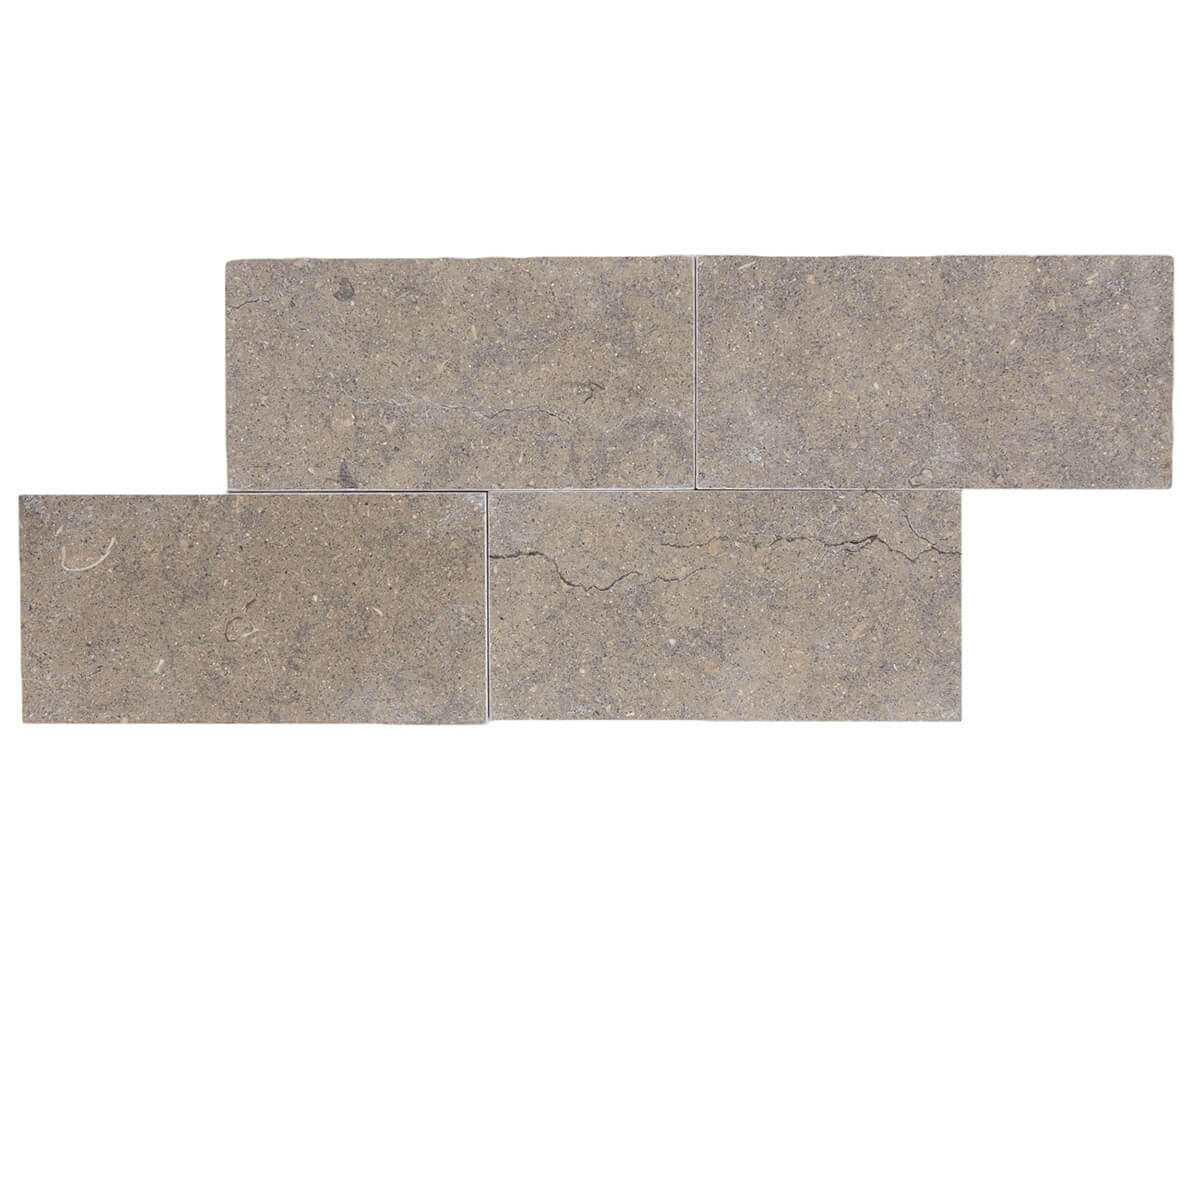 haussmann cote d azur limestone rectangle natural stone field tile 3x6 honed